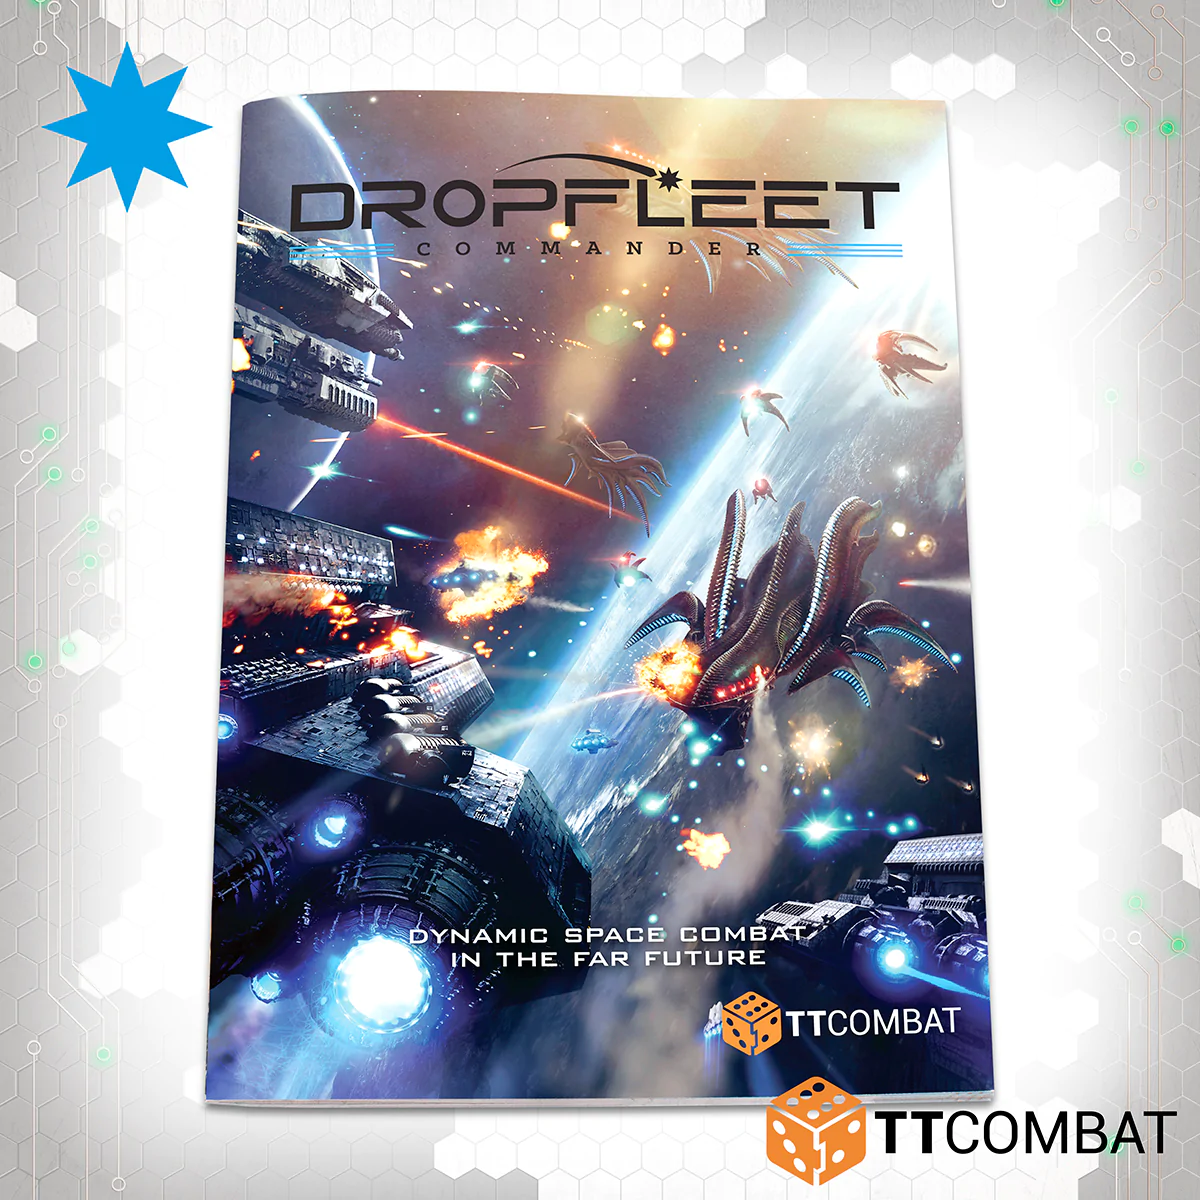 dropfleet commander rulebook cover